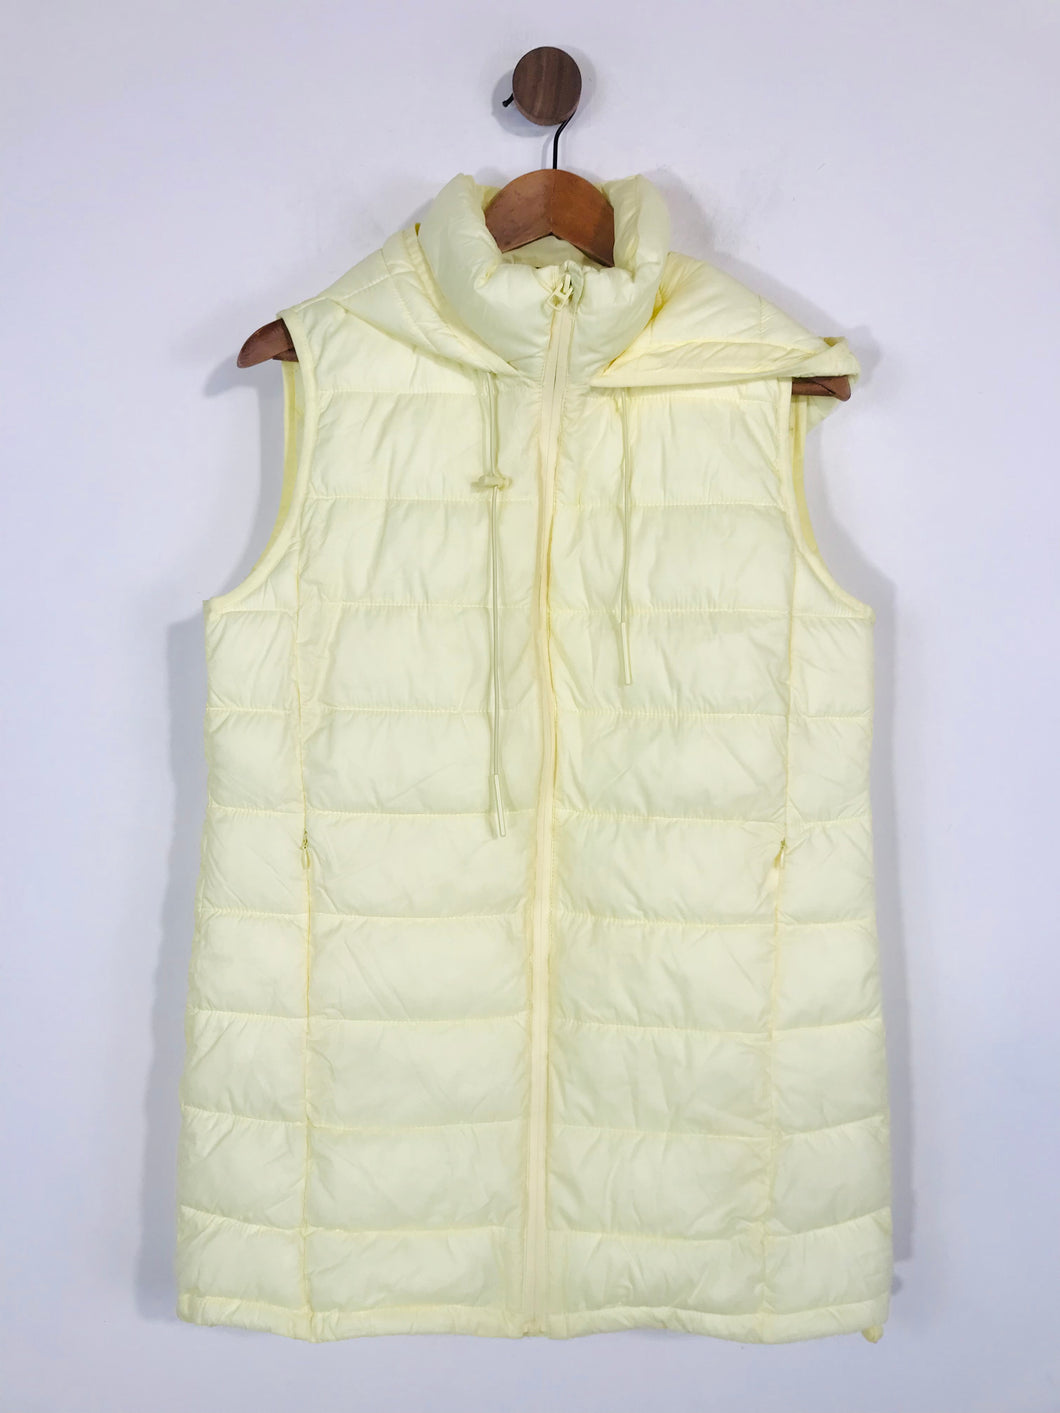 Zara Women's Hooded Quilted Gilet Jacket | M UK10-12 | Yellow